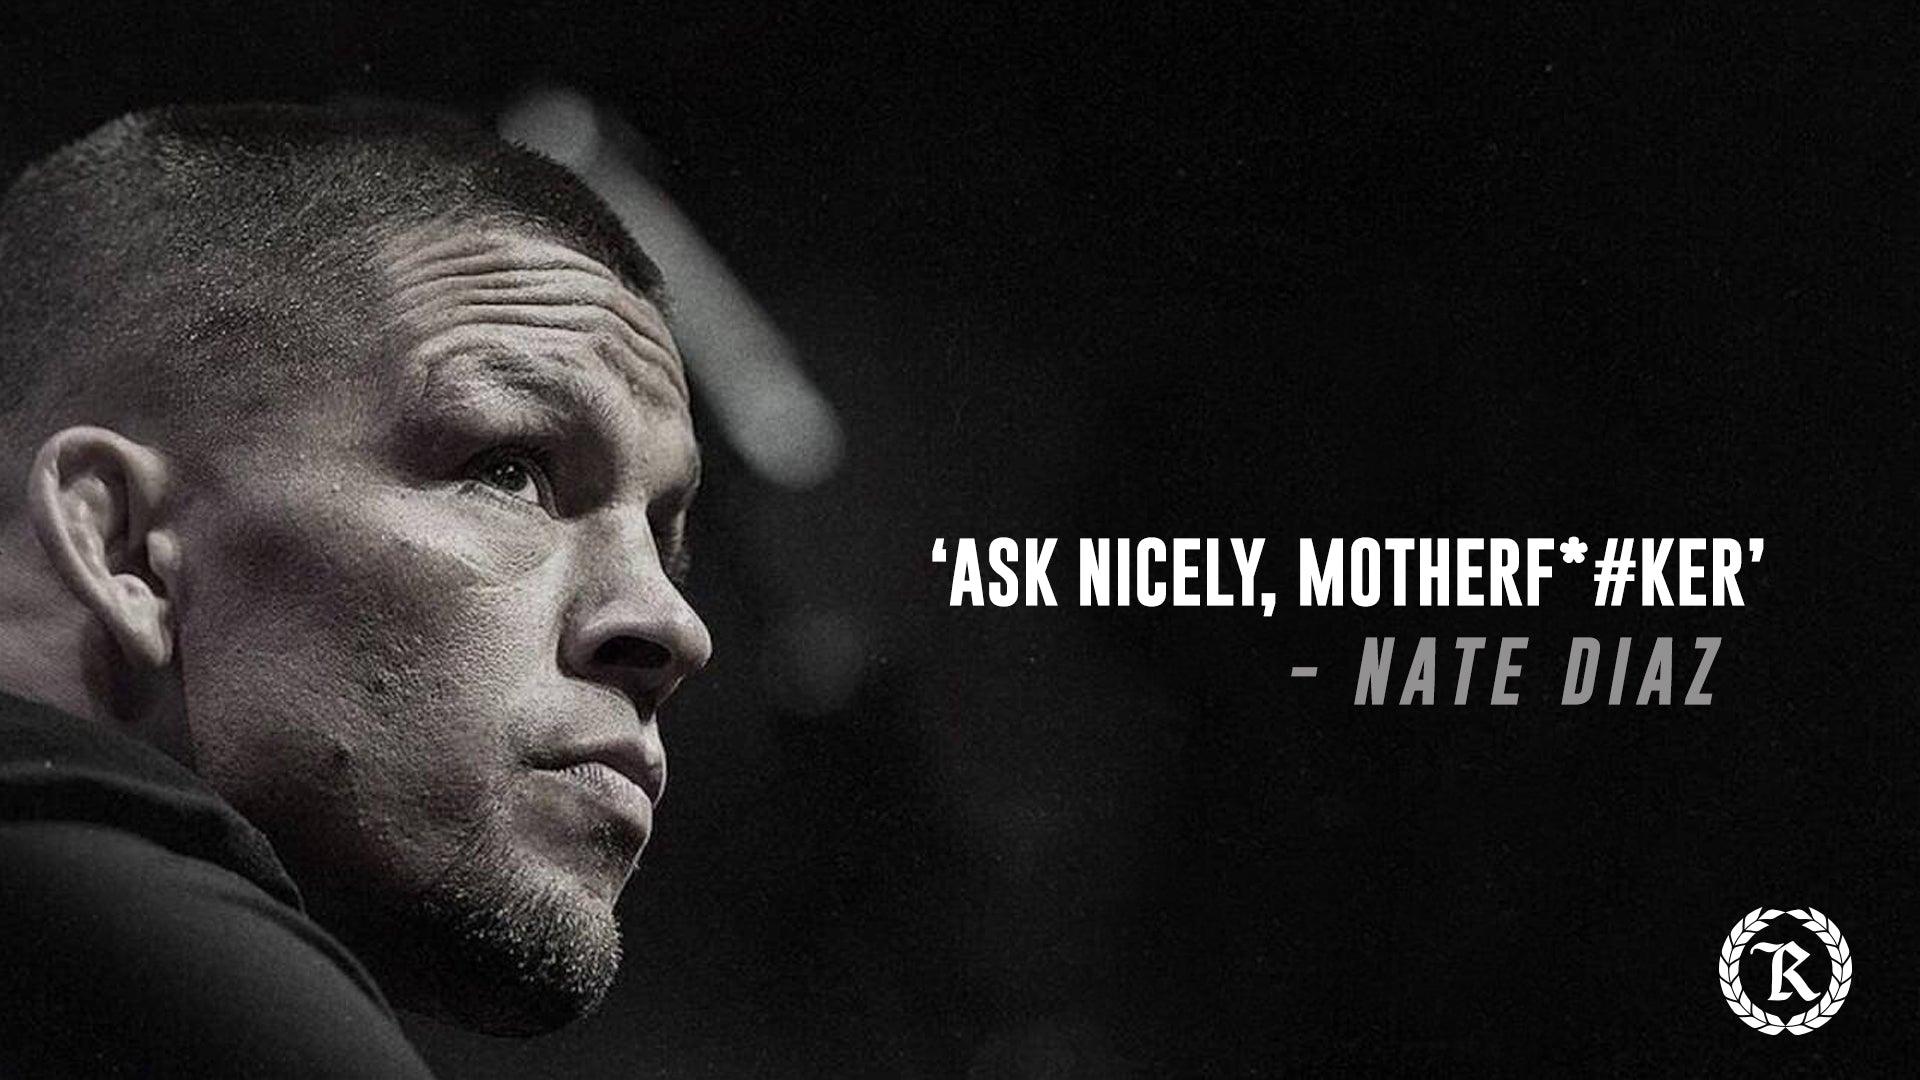 Nate Diaz breaks down possible UFC return: 'Ask nicely, motherf*ckers' - Represent Ltd.™